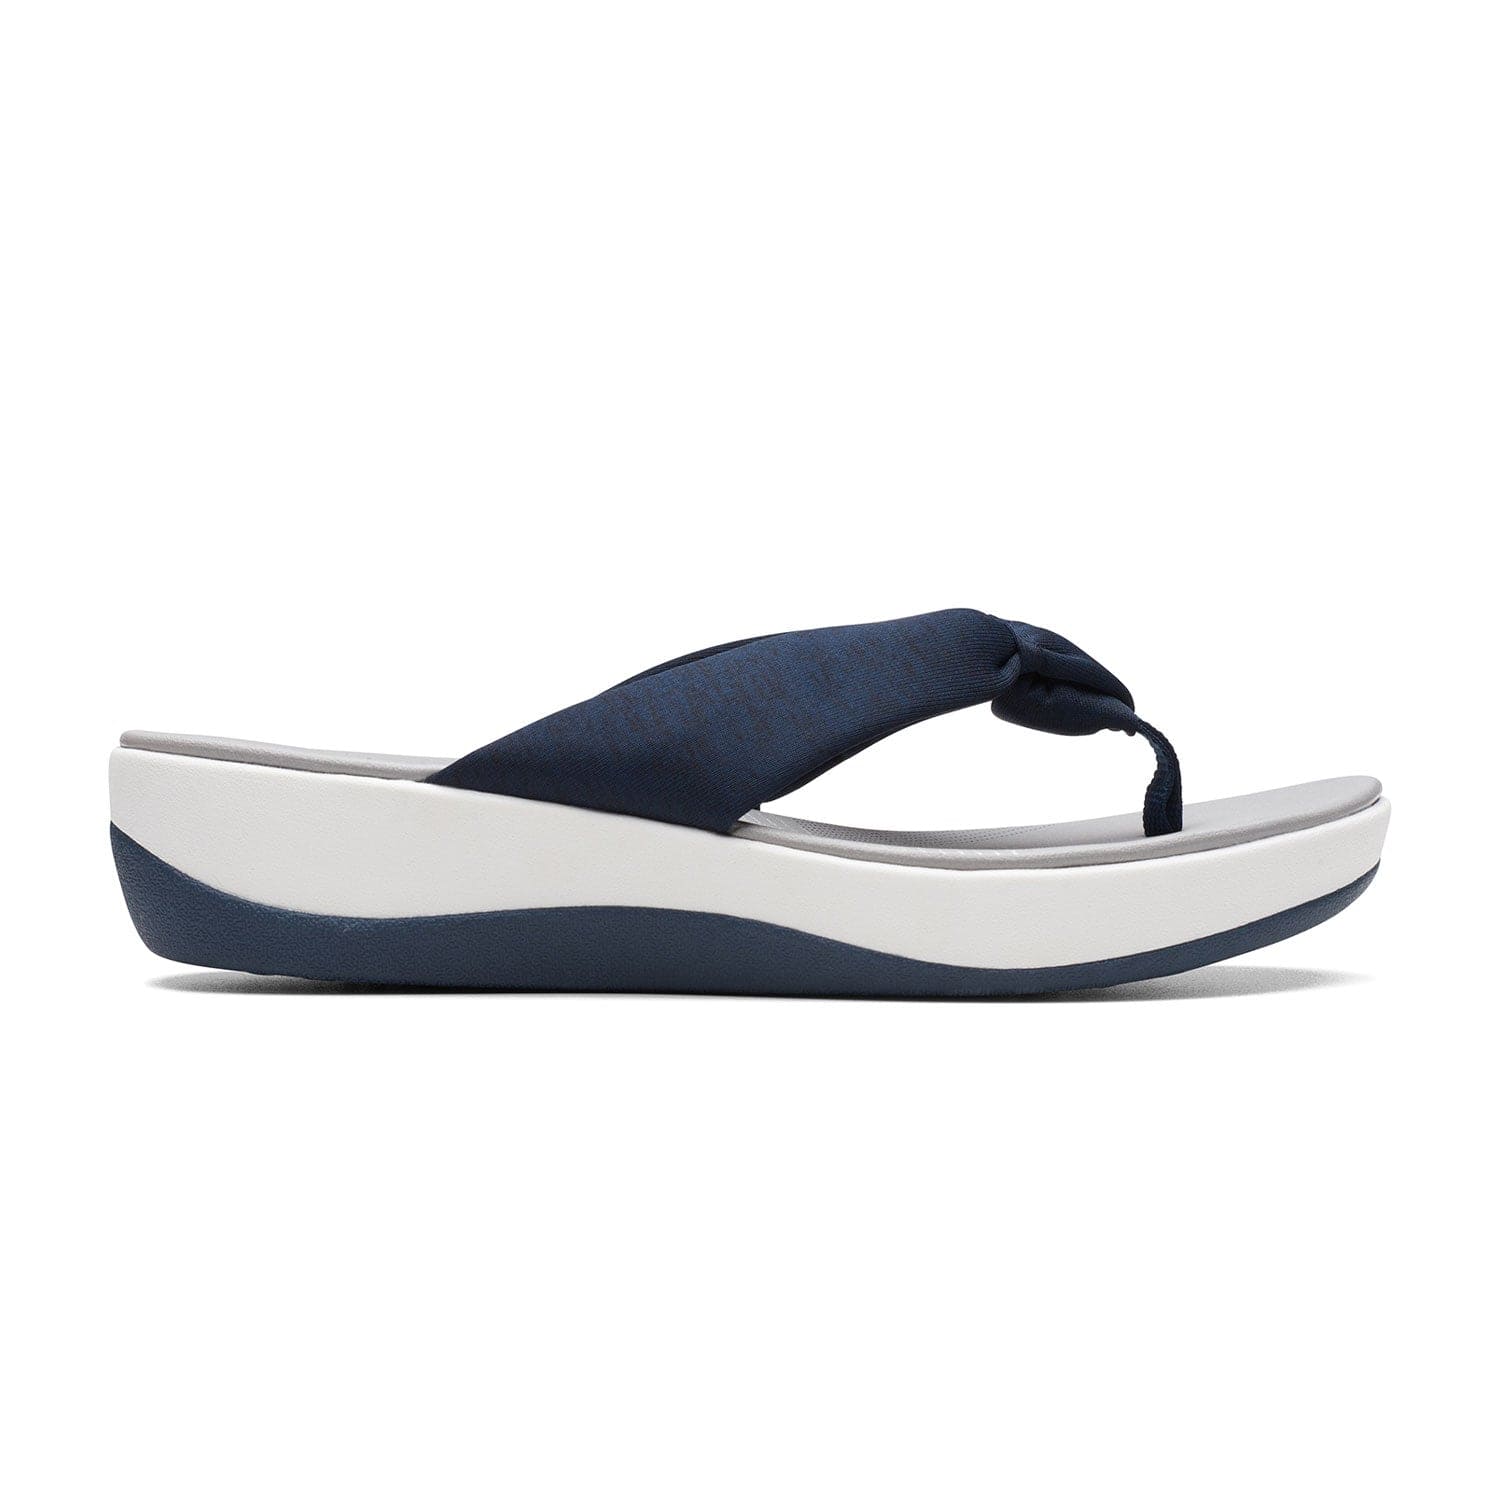 Clarks Arla Glison 2 Sandals - Blue Fabric  261752564 -D Width (Standard Fit)